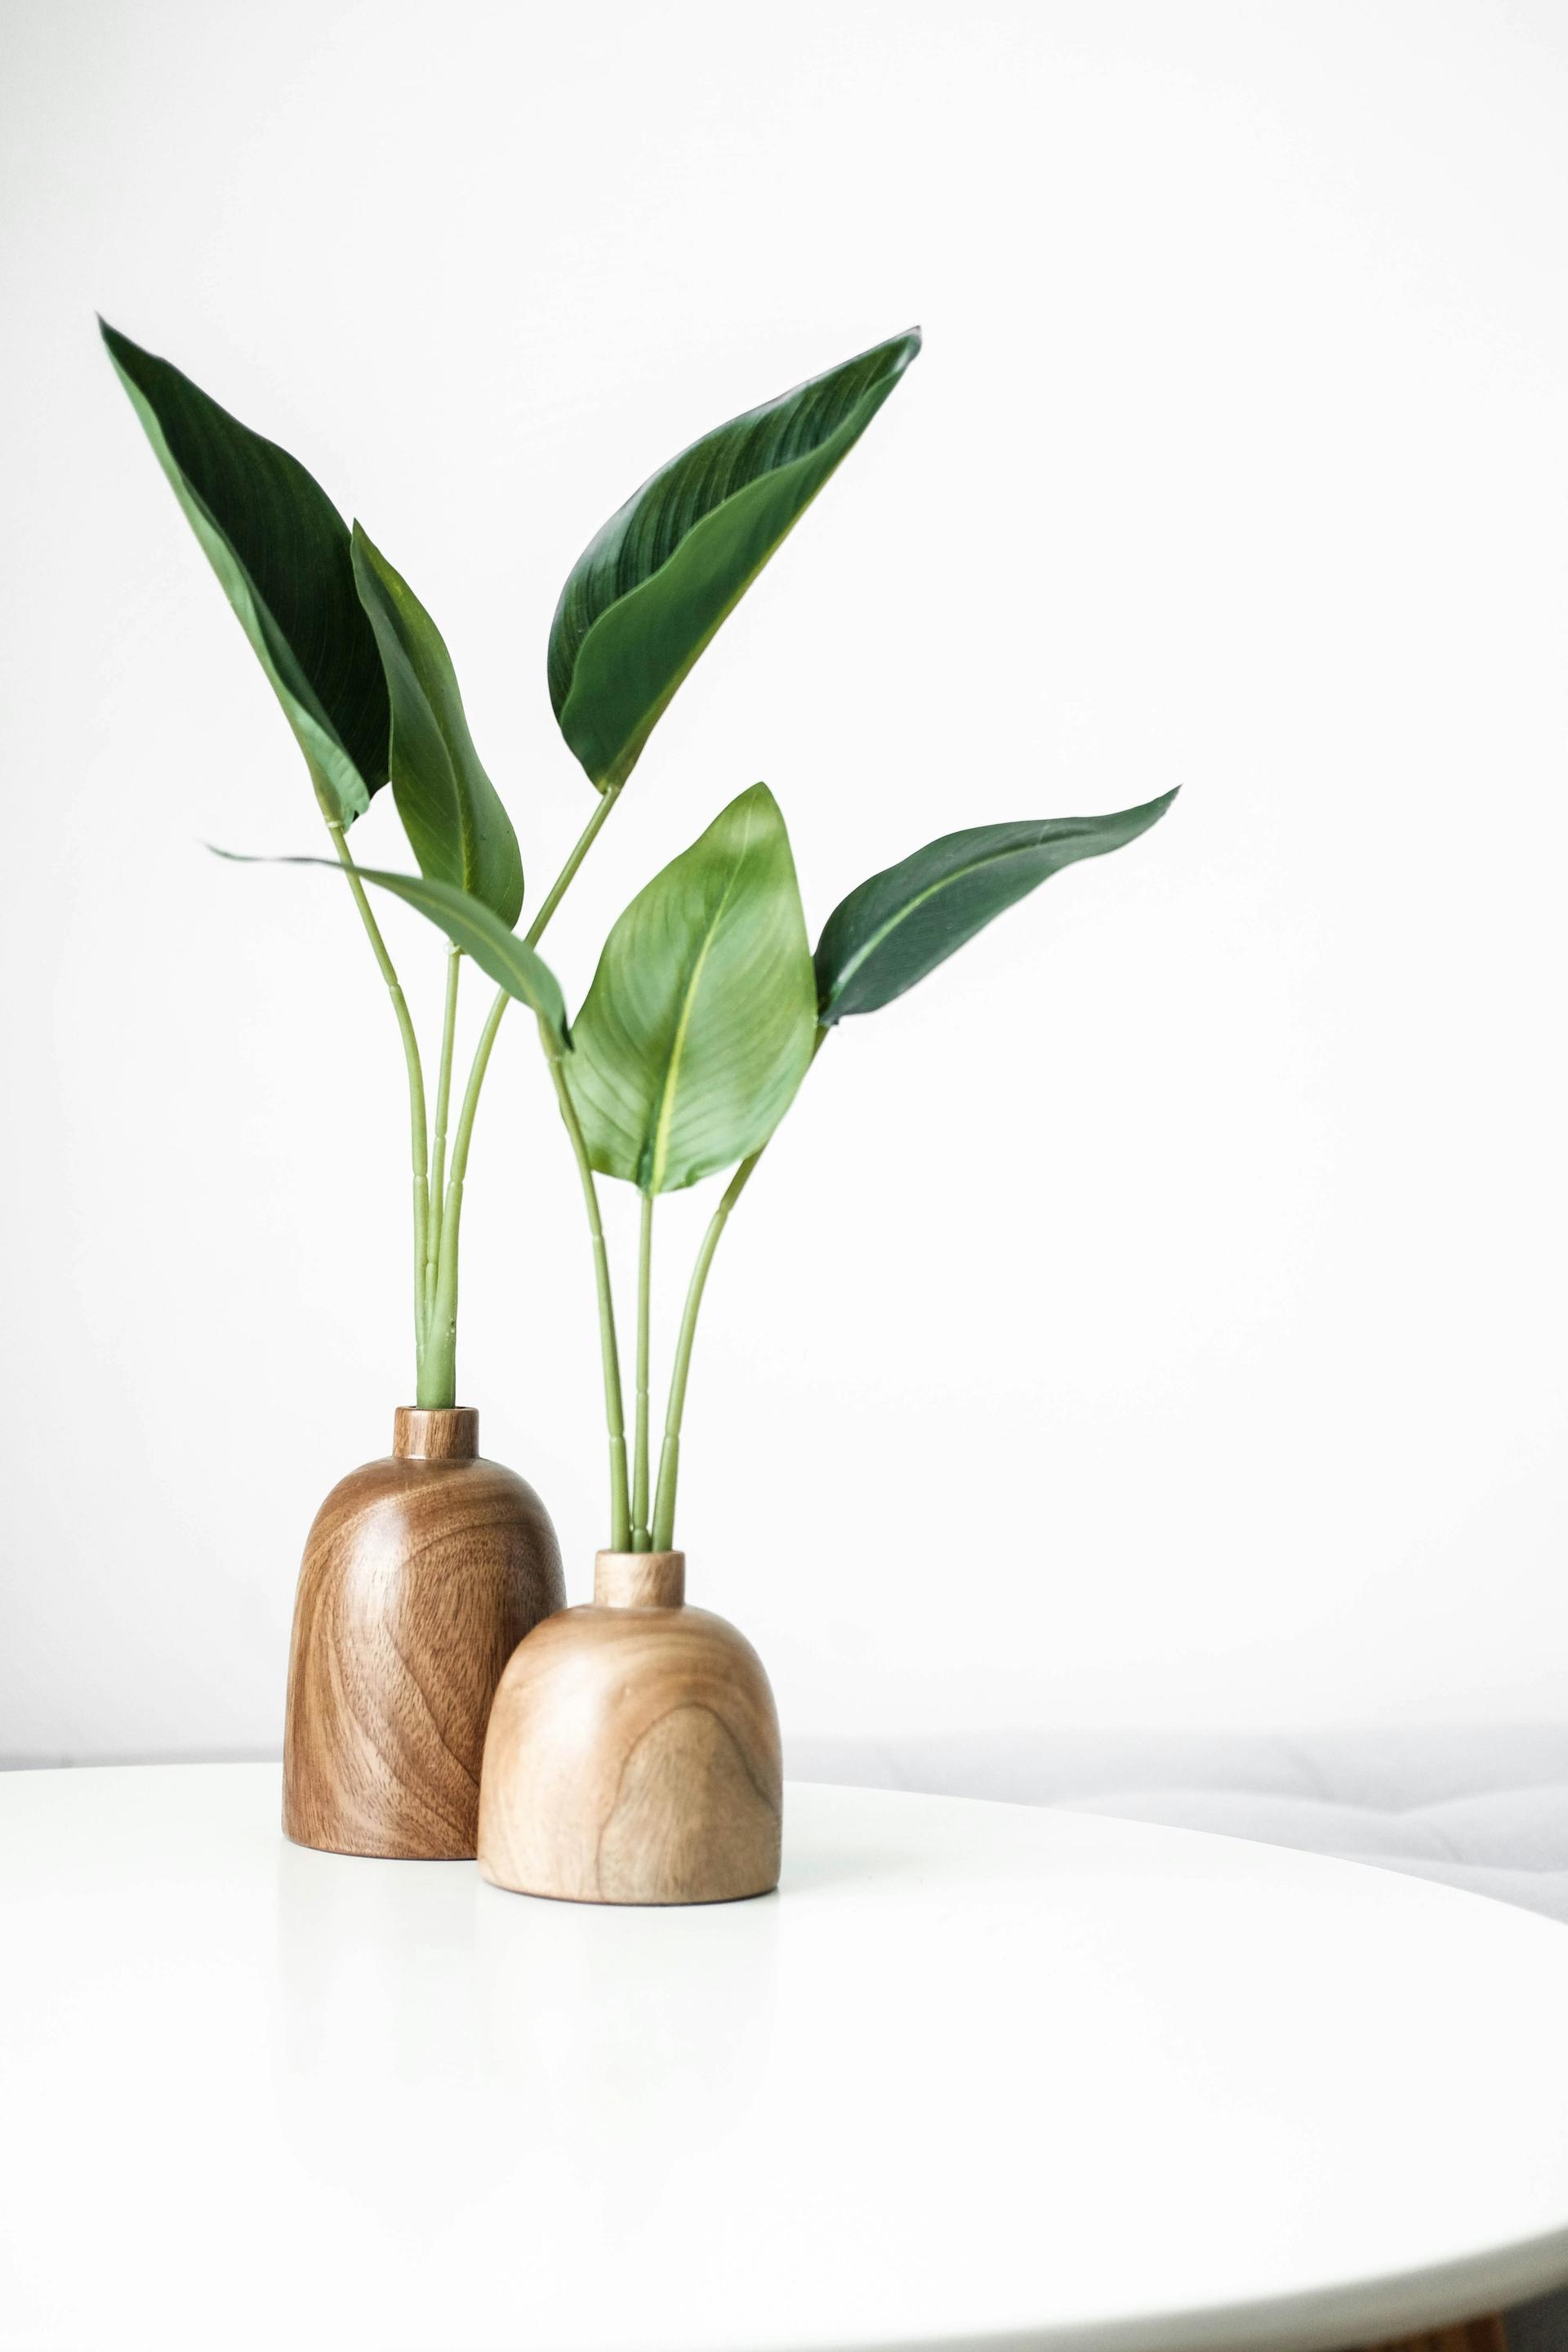 Rustic Elegance: Brown Wooden Vase - Nature's Beauty in Every Grain